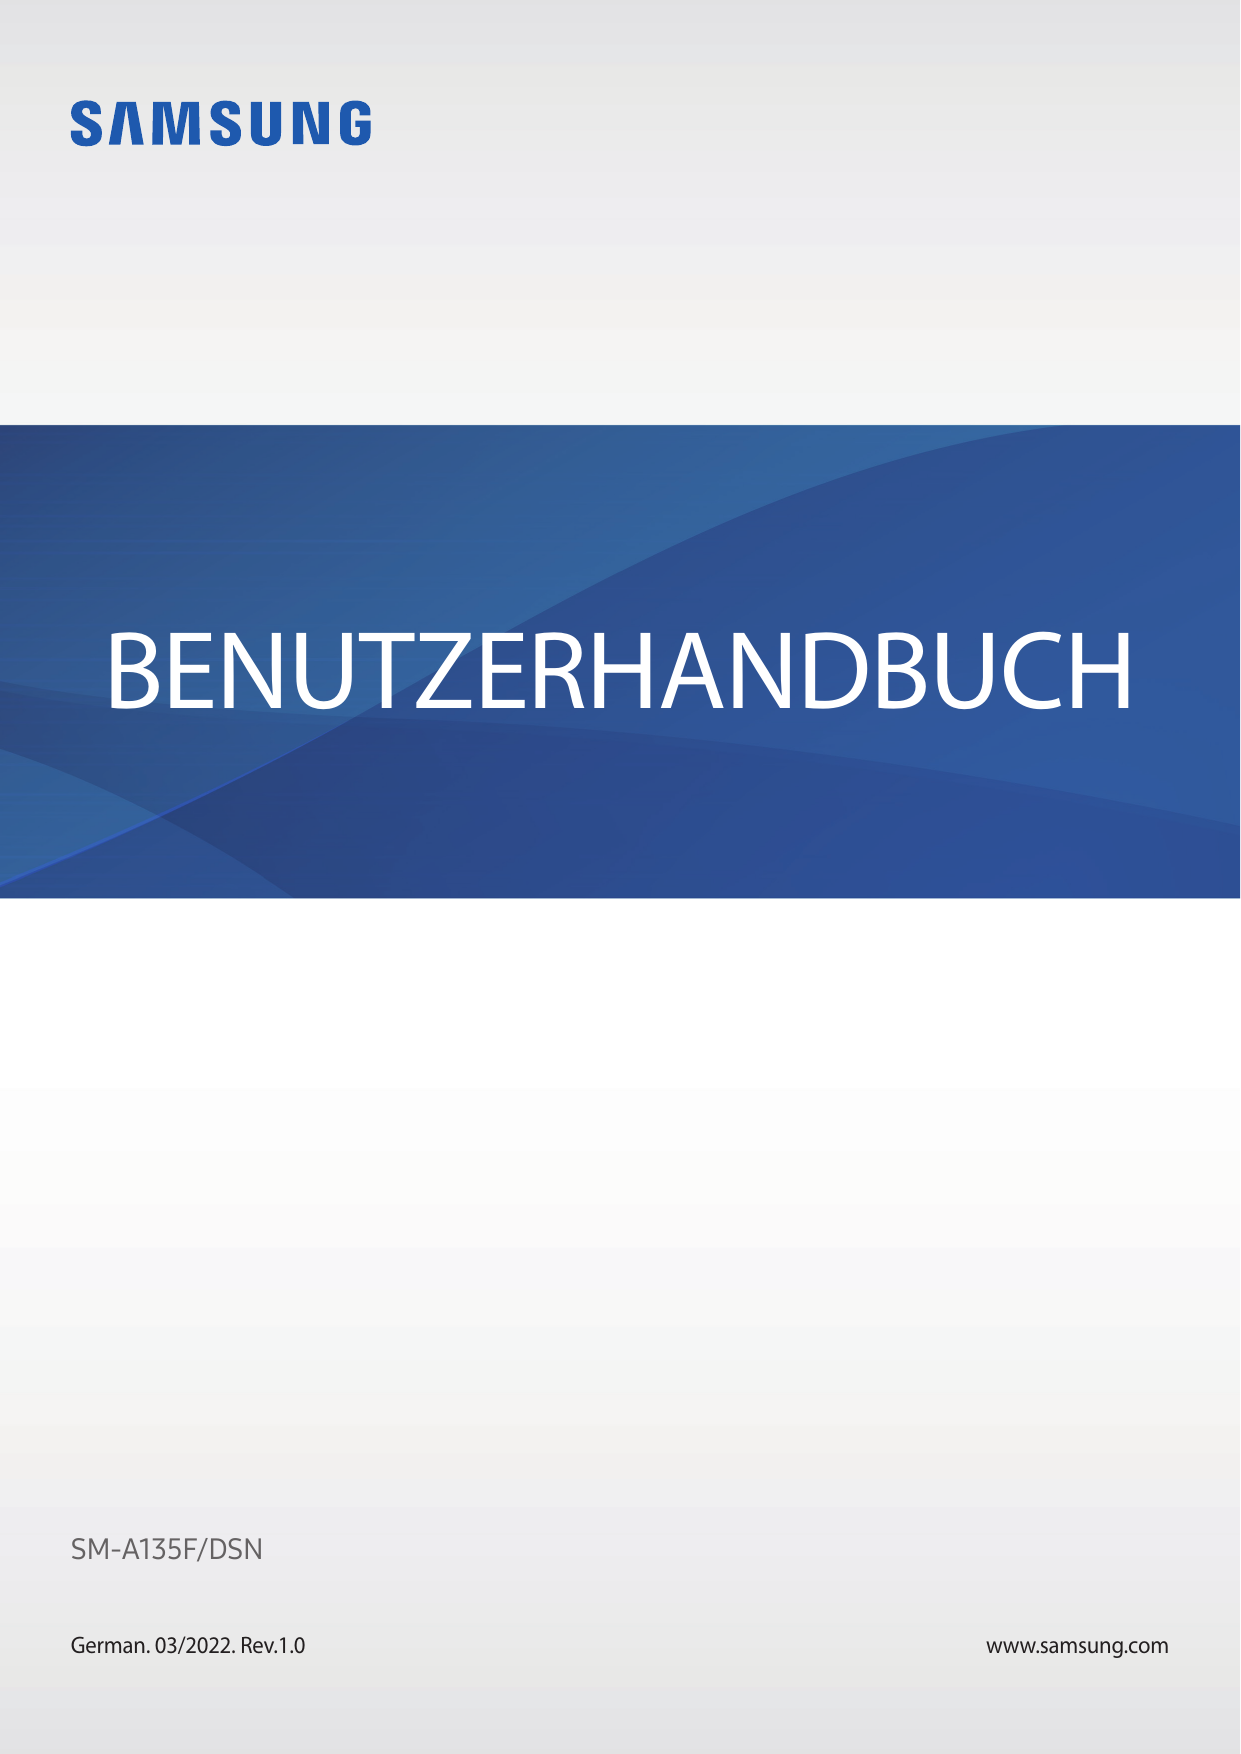 BENUTZERHANDBUCHSM-A135F/DSNGerman. 03/2022. Rev.1.0www.samsung.com